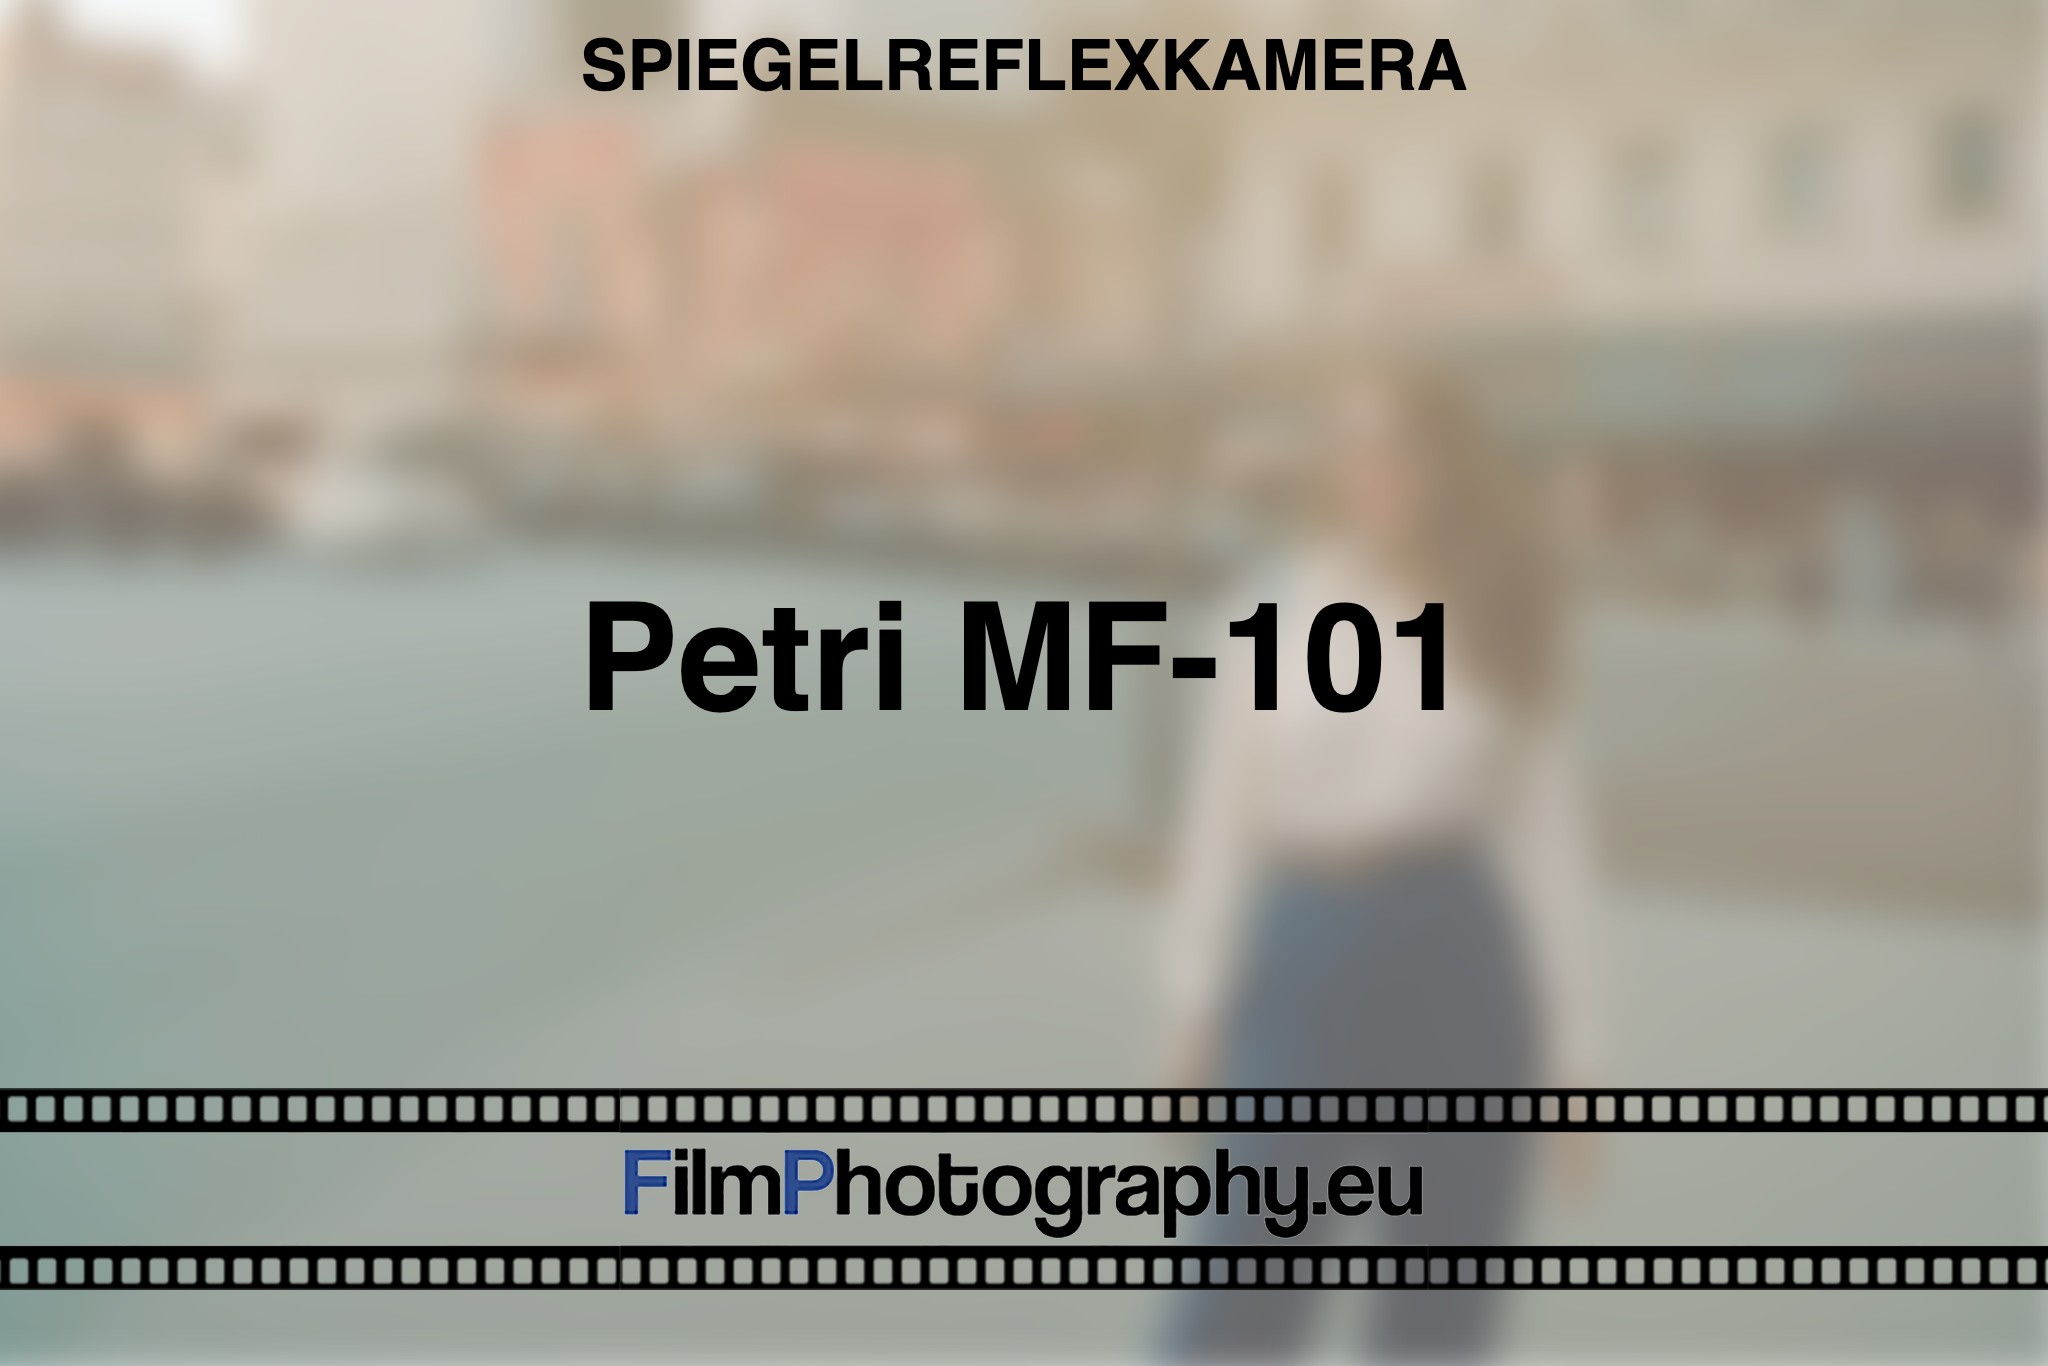 petri-mf-101-spiegelreflexkamera-bnv